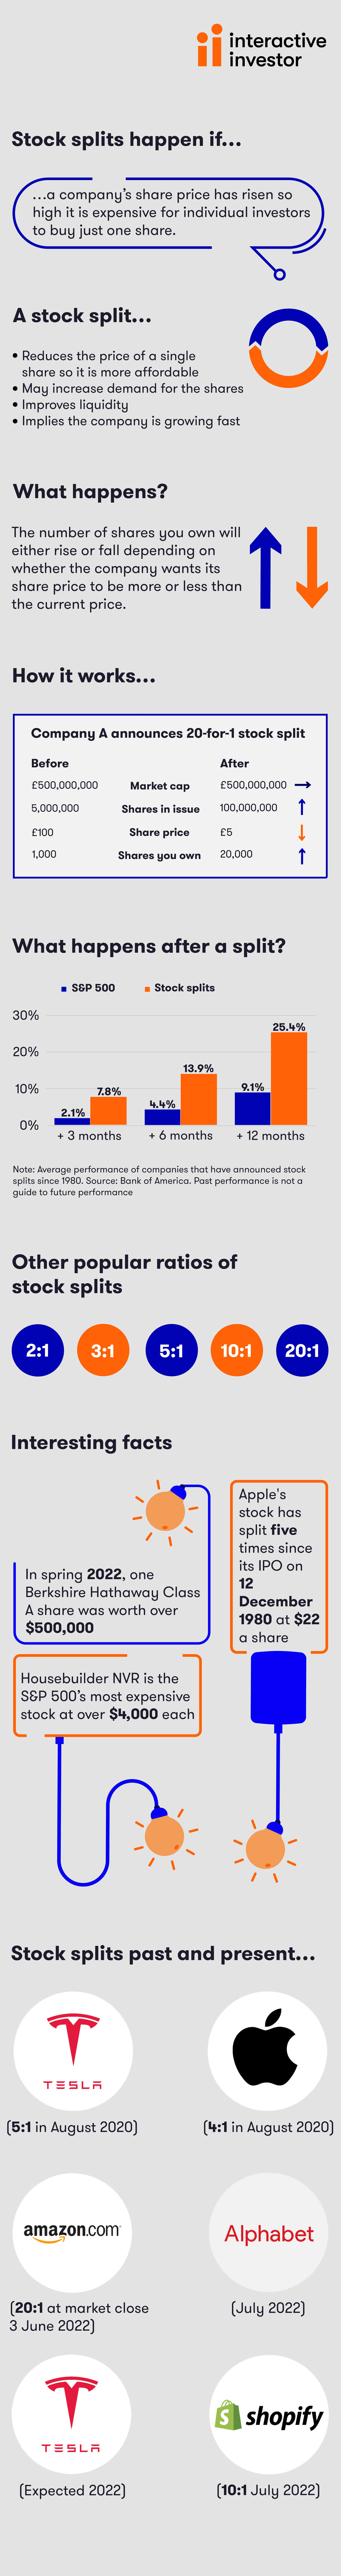 Stock-split infographic new June 2022